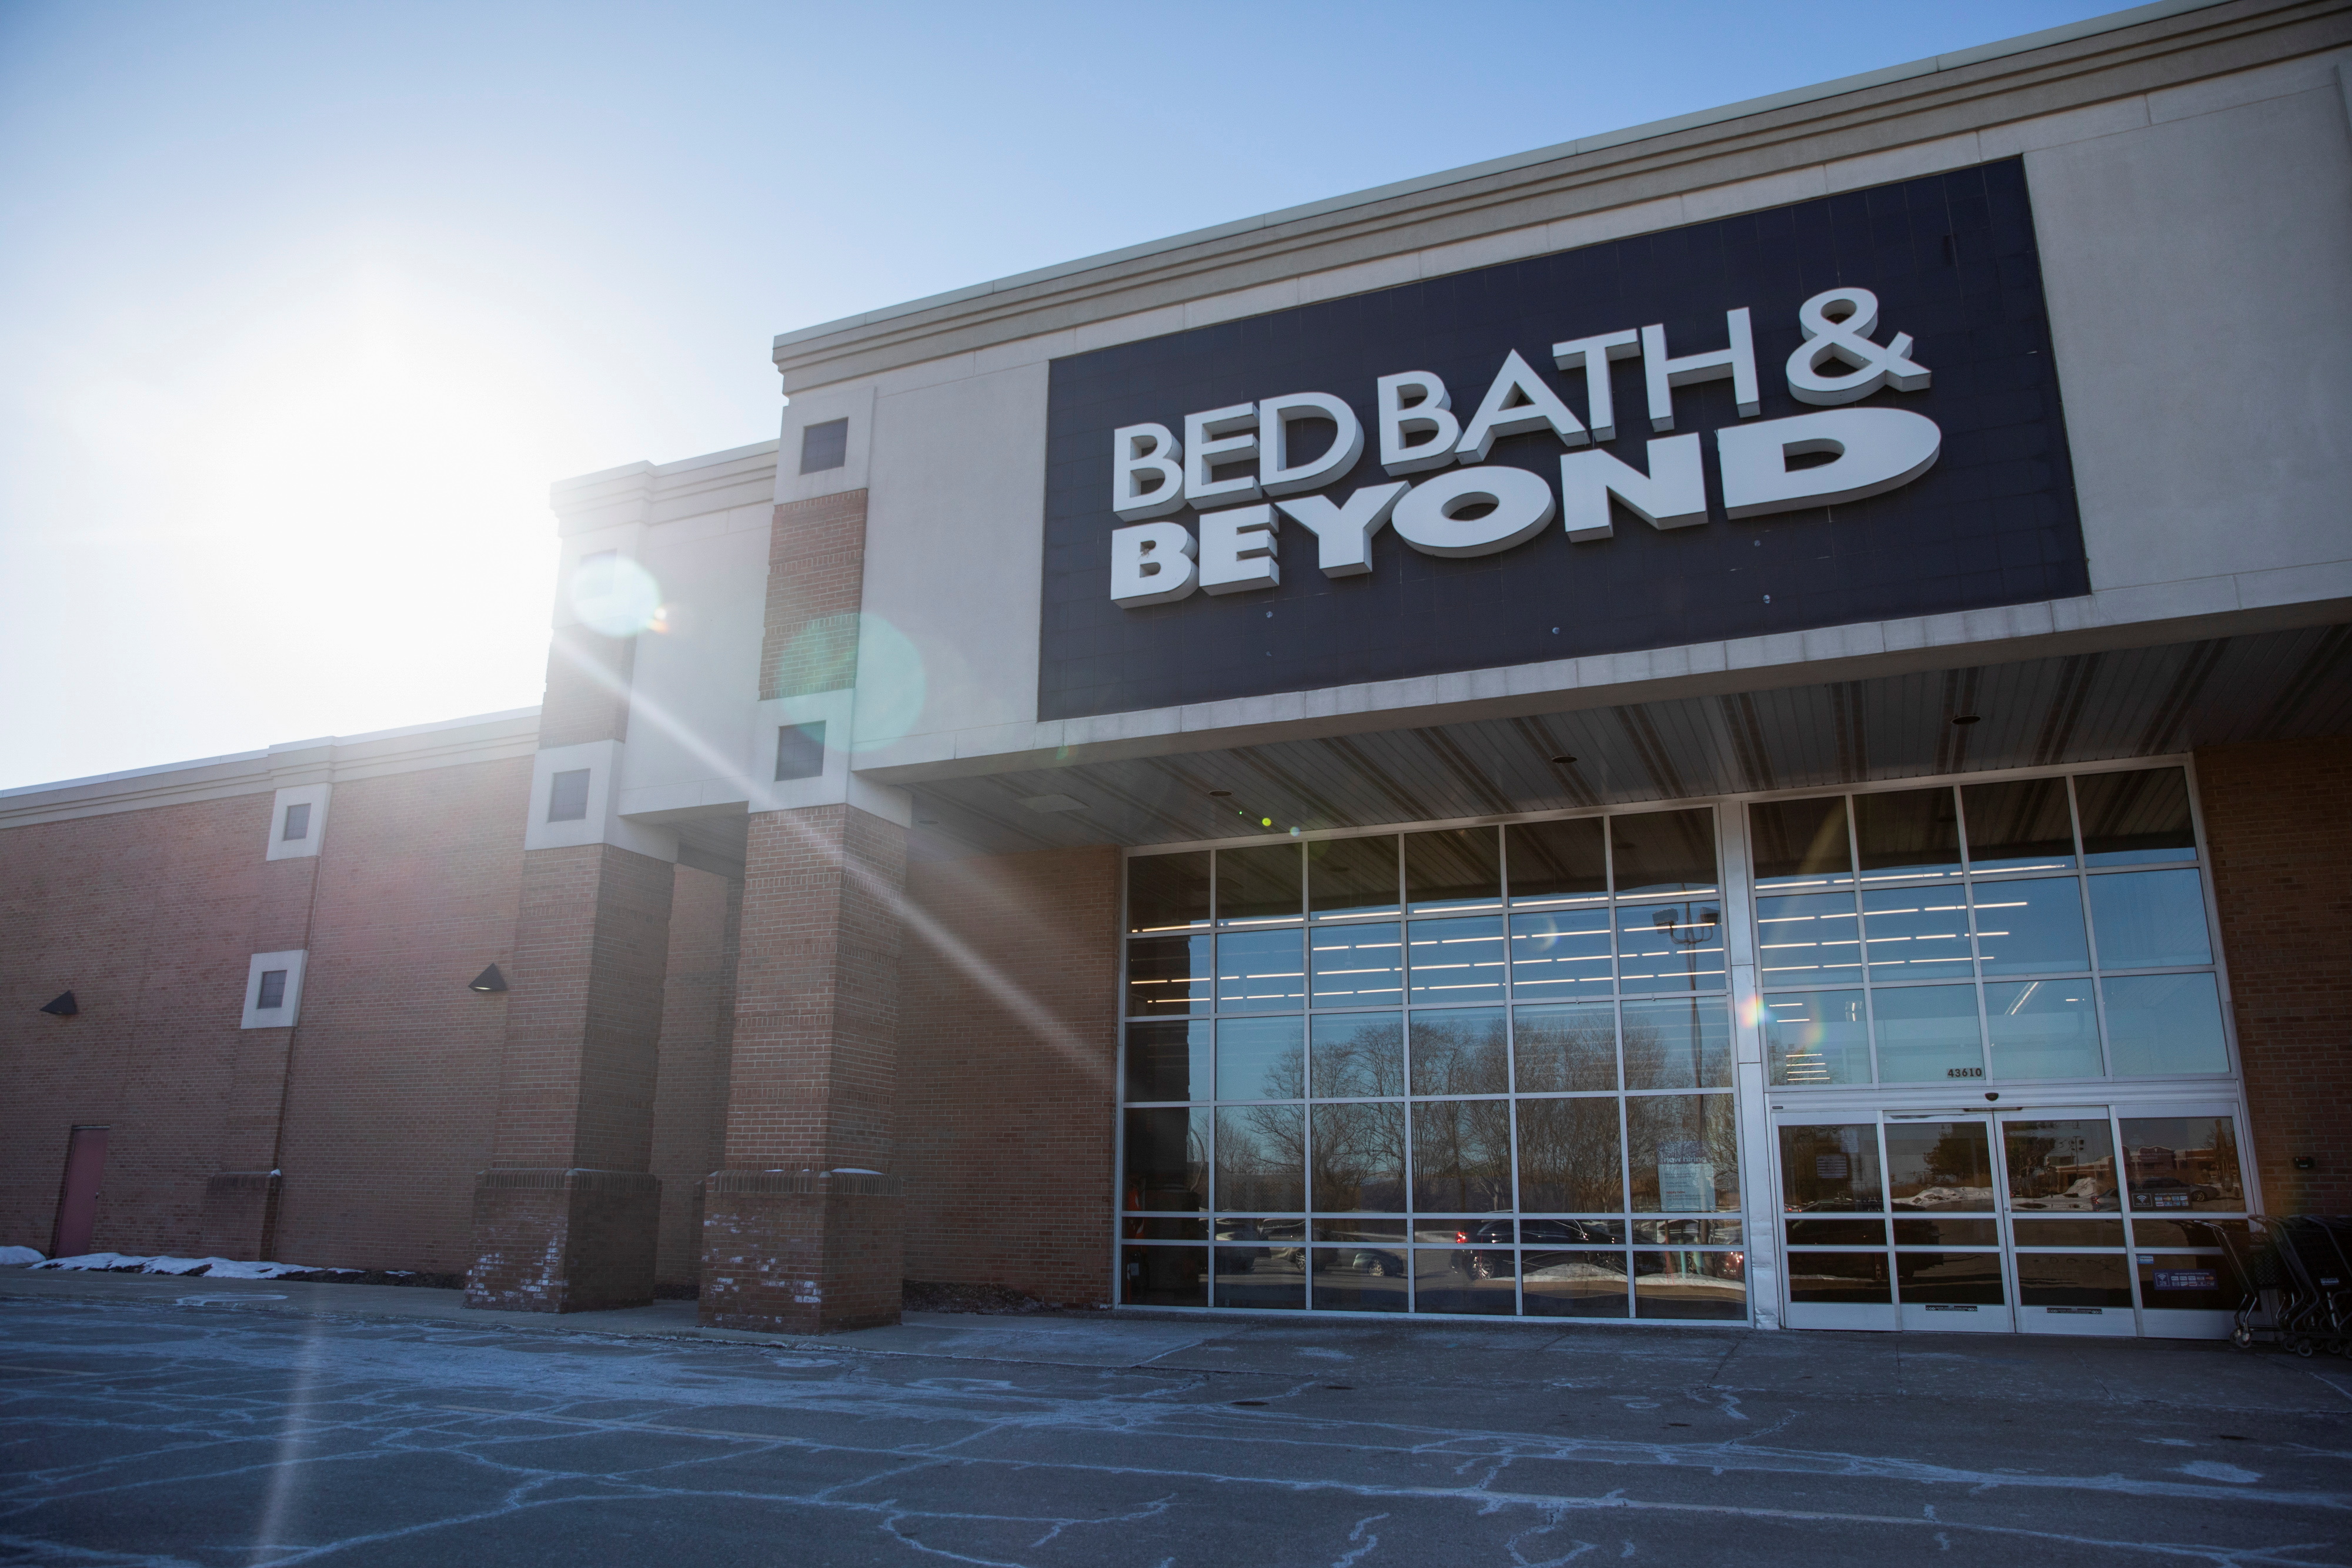 Görünüm: Novi, Michigan'da Bed Bath & Beyond mağazası.